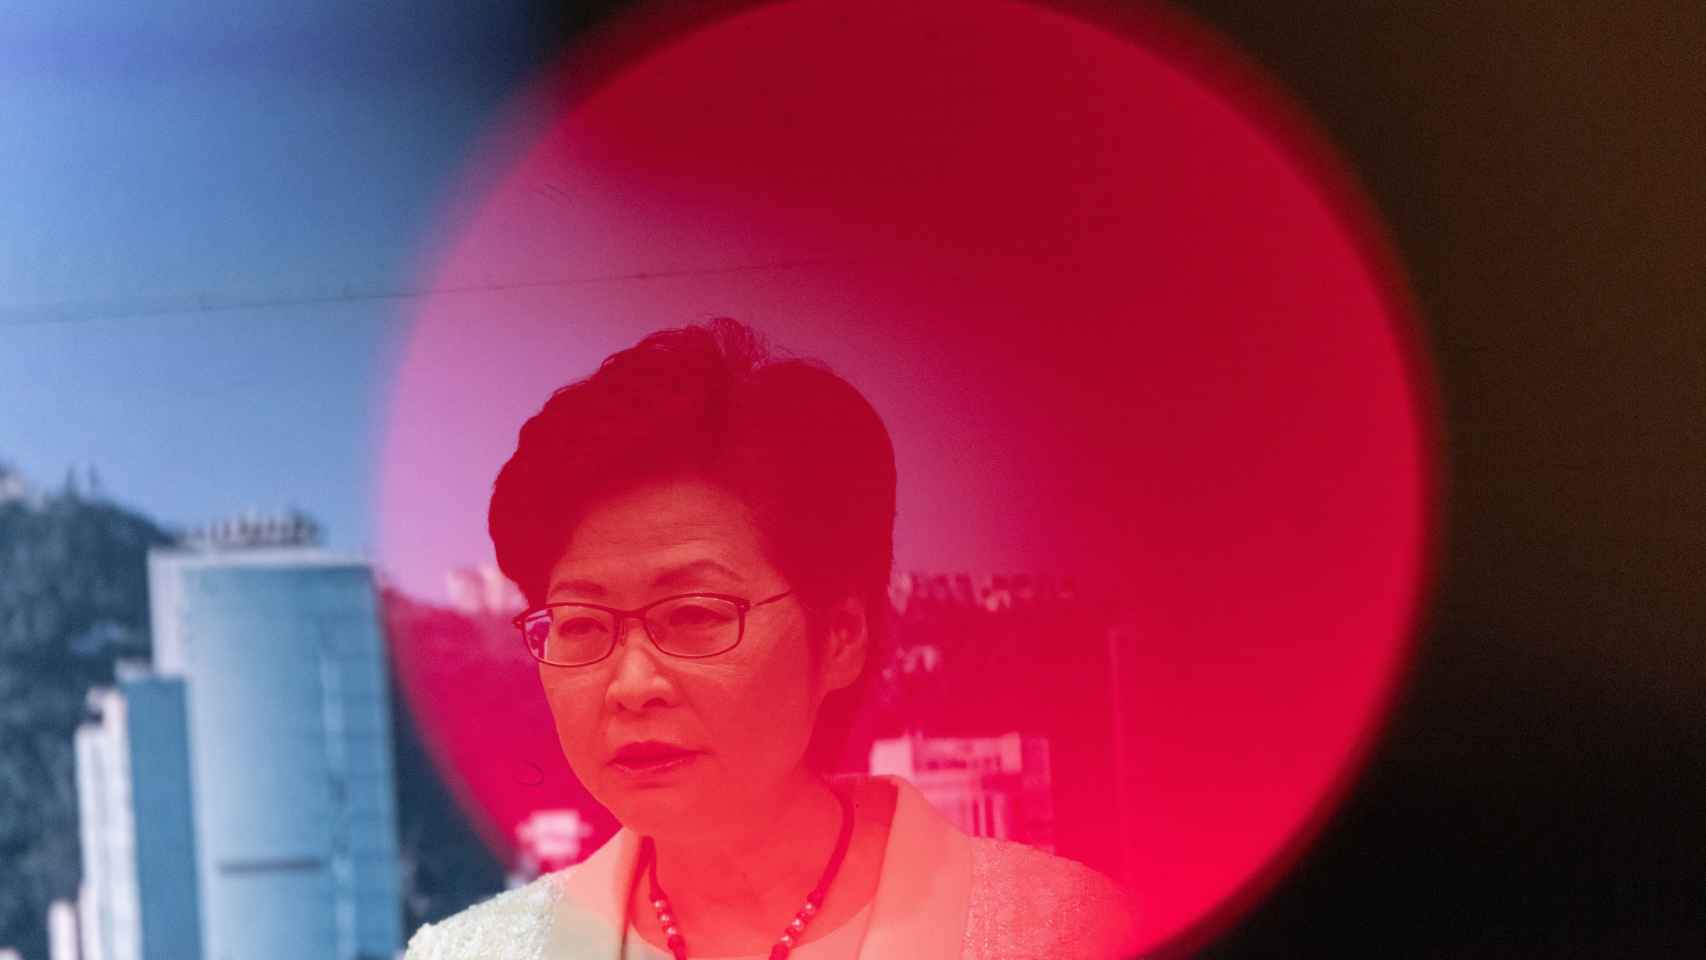 La jefa de Gobierno de Hong Kong, Carrie Lam.